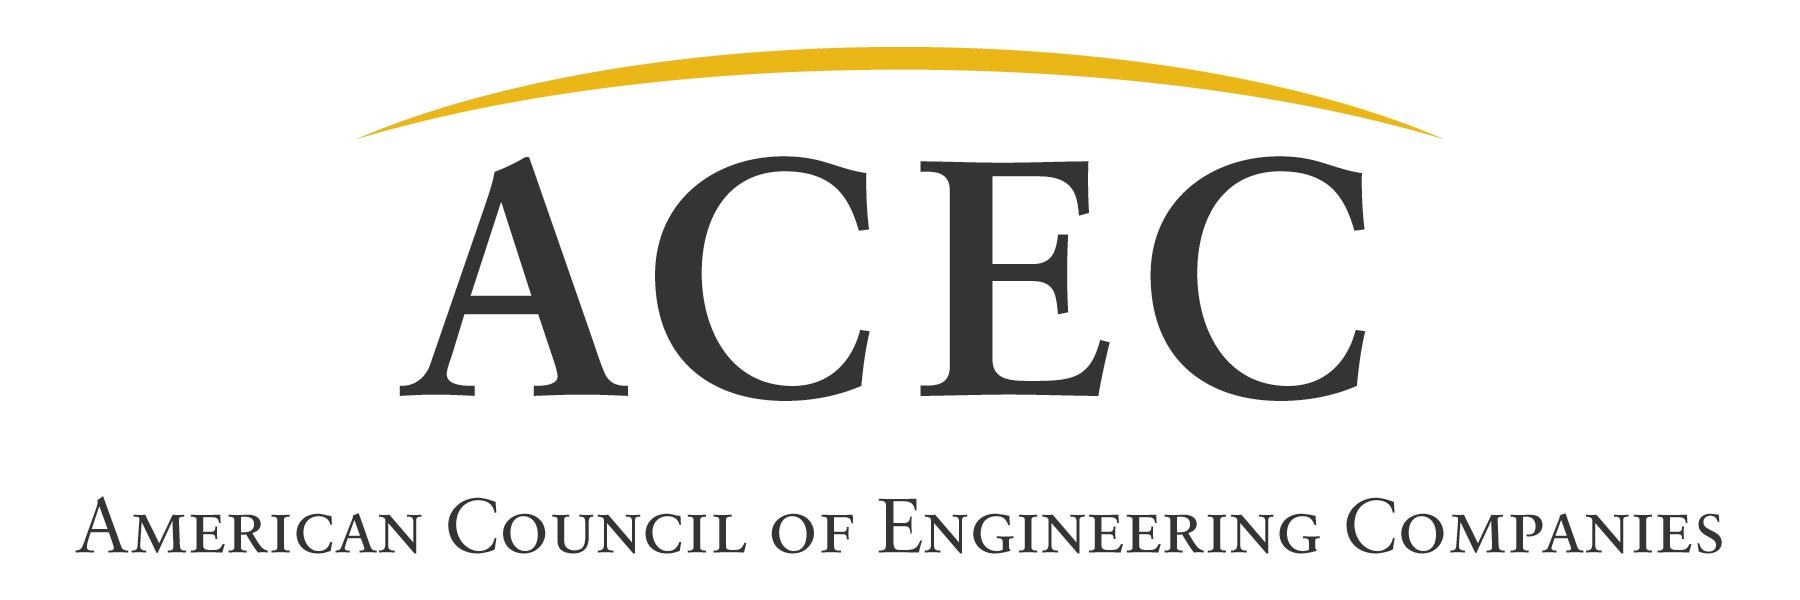 acec_logo.jpg